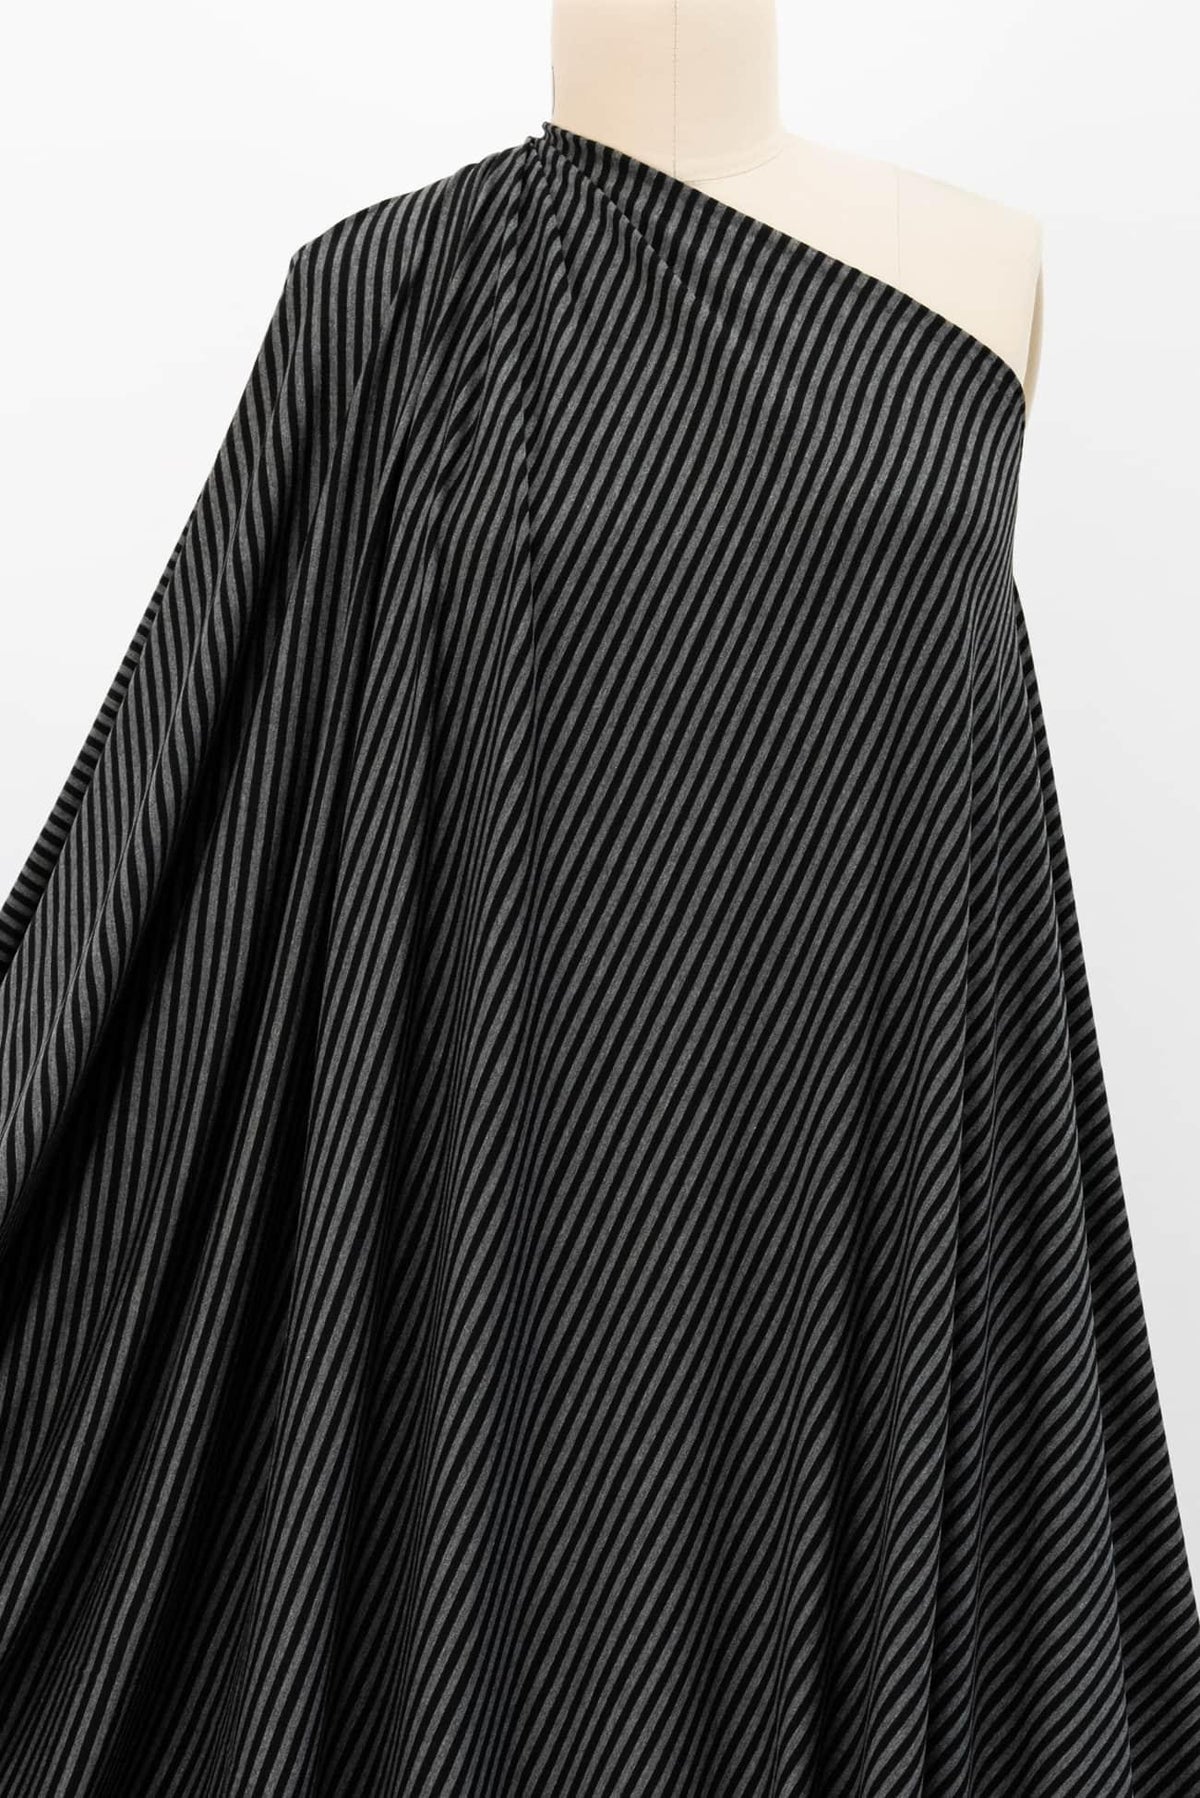 Hamlet Stripe Bamboo Rayon/Spandex Knit - Marcy Tilton Fabrics